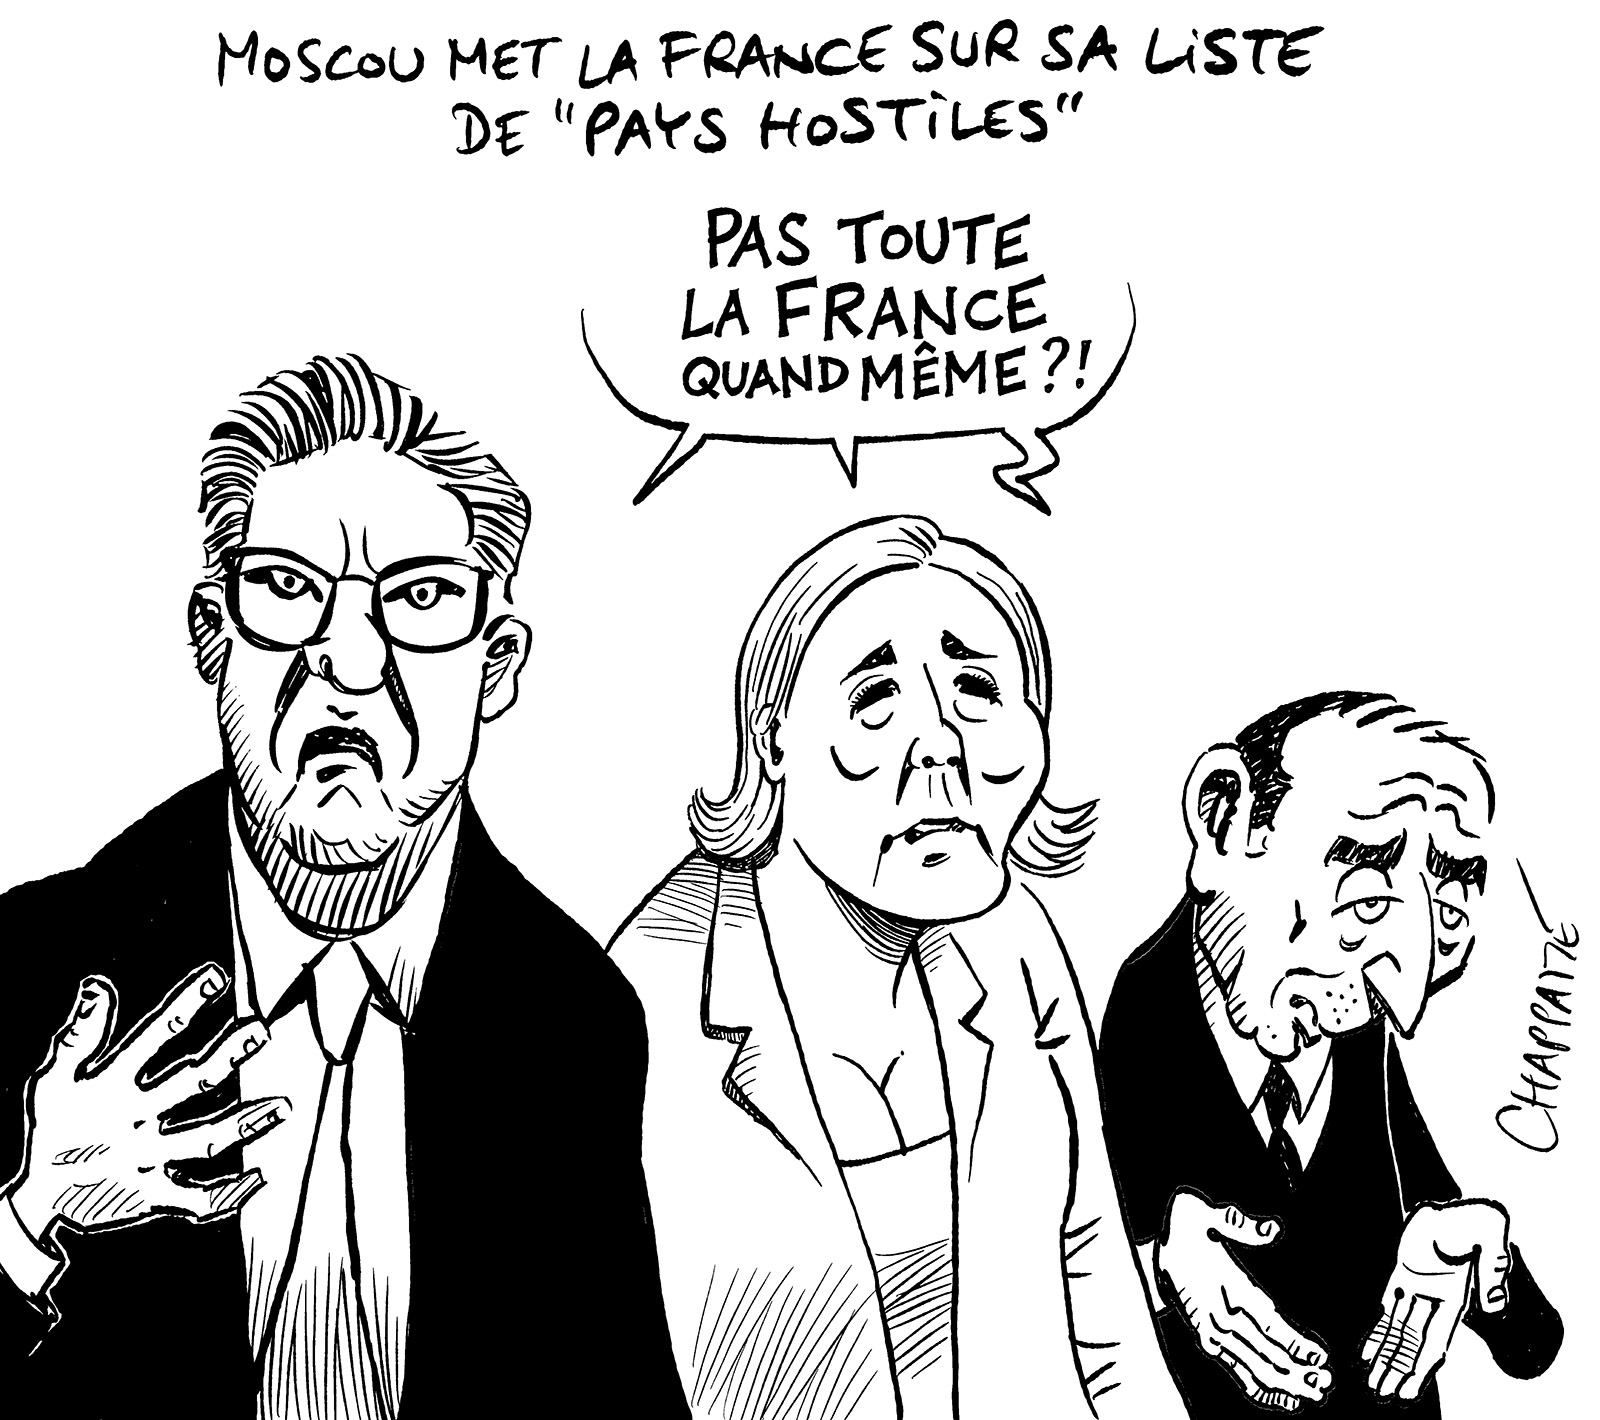 La Russie met la France sur sa liste de pays hostiles | Globecartoon ...